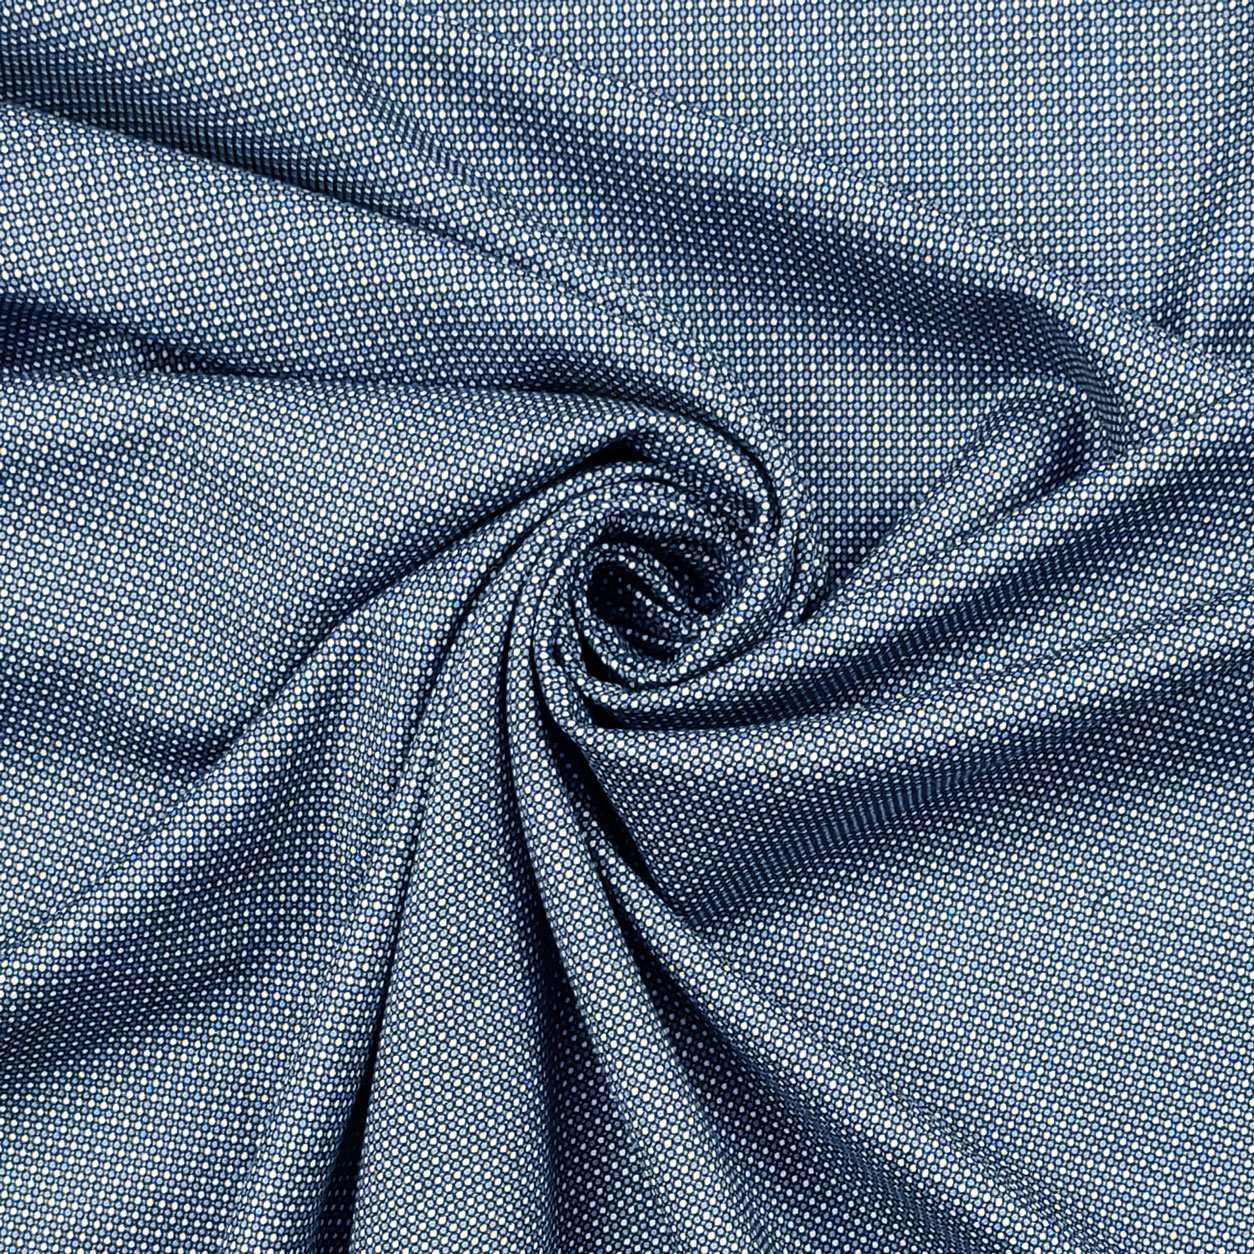 cotone-tessuto-microfantasia-blu-e-bianca